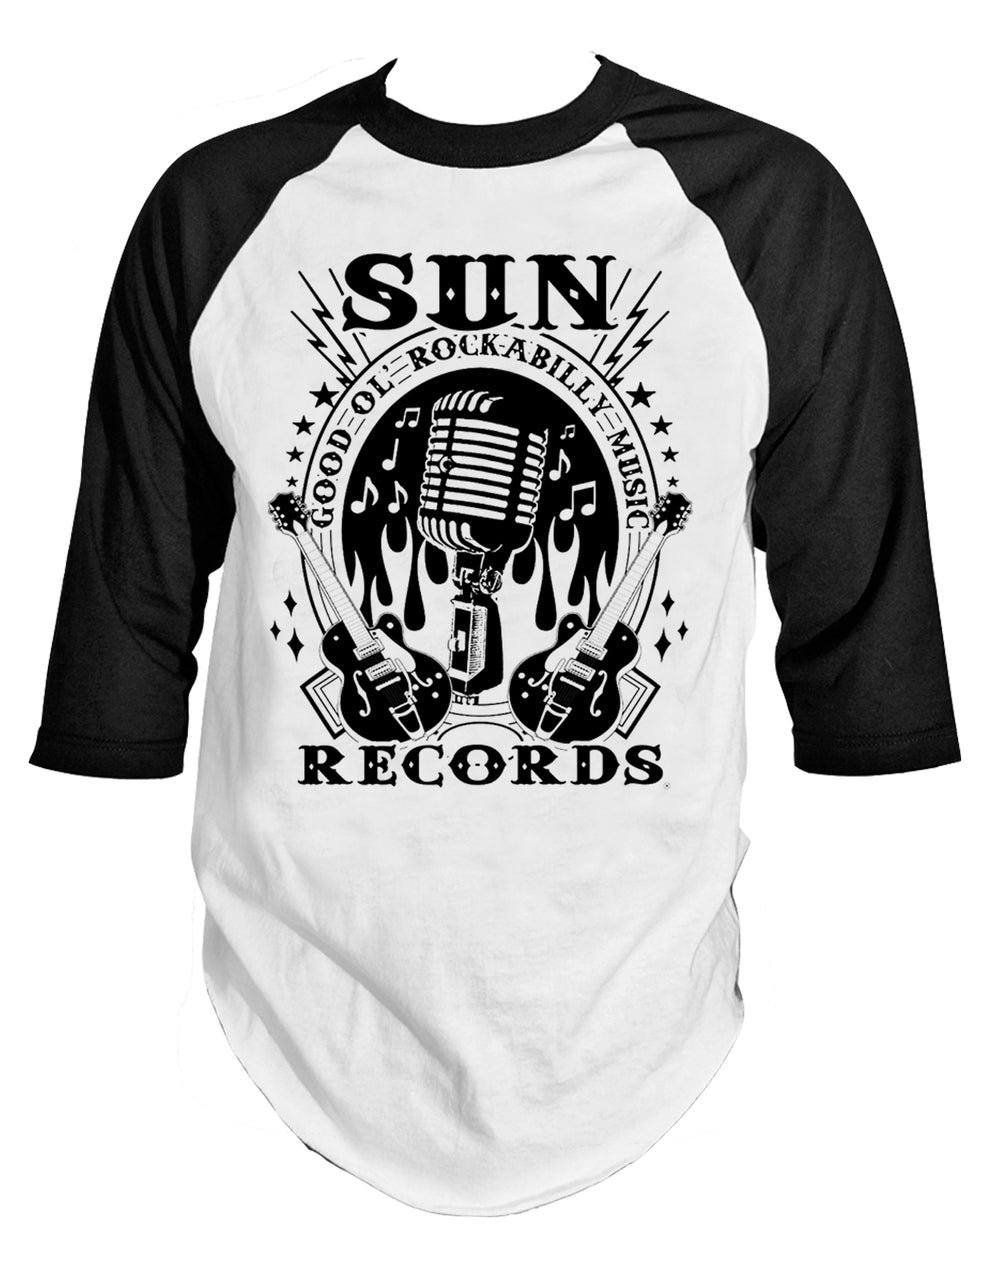 Sun Records Rockabilly Music Men's Raglan Tee